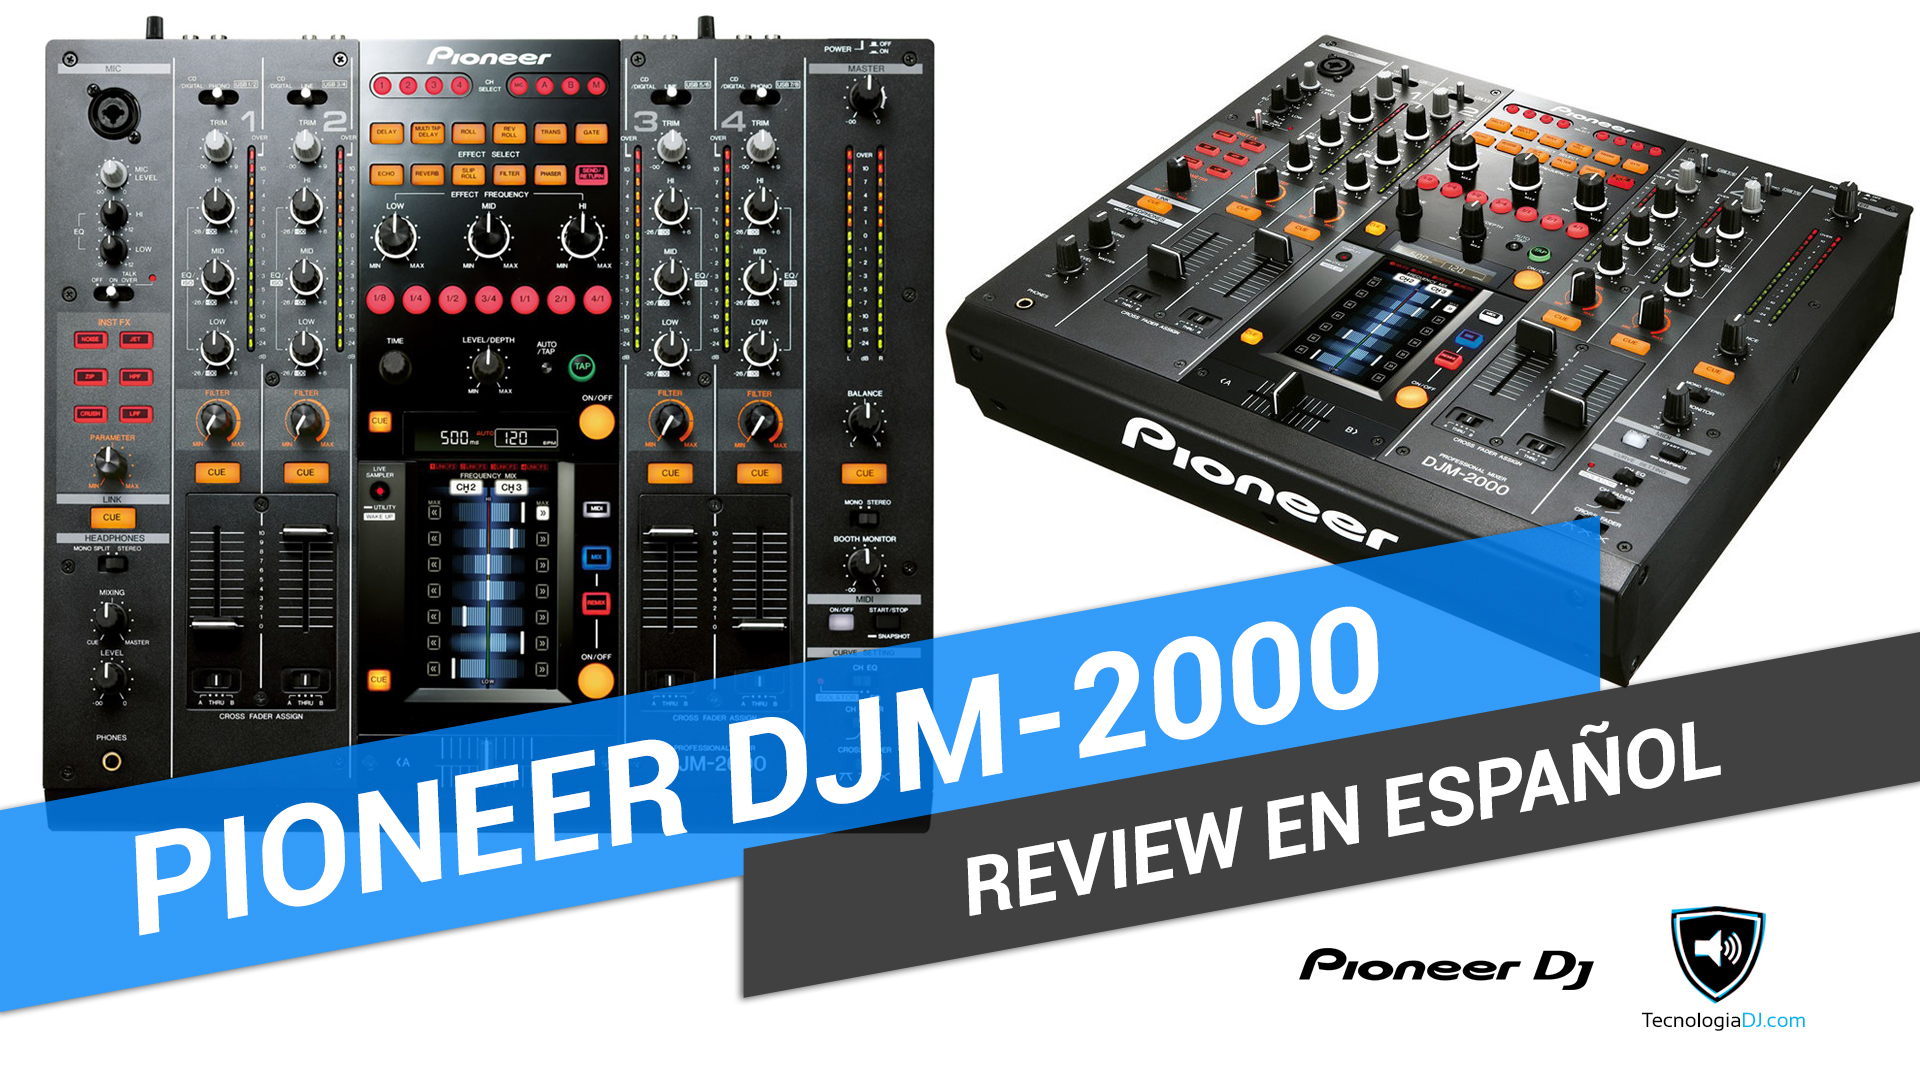 Review en español mixer Pioneer DJM-2000